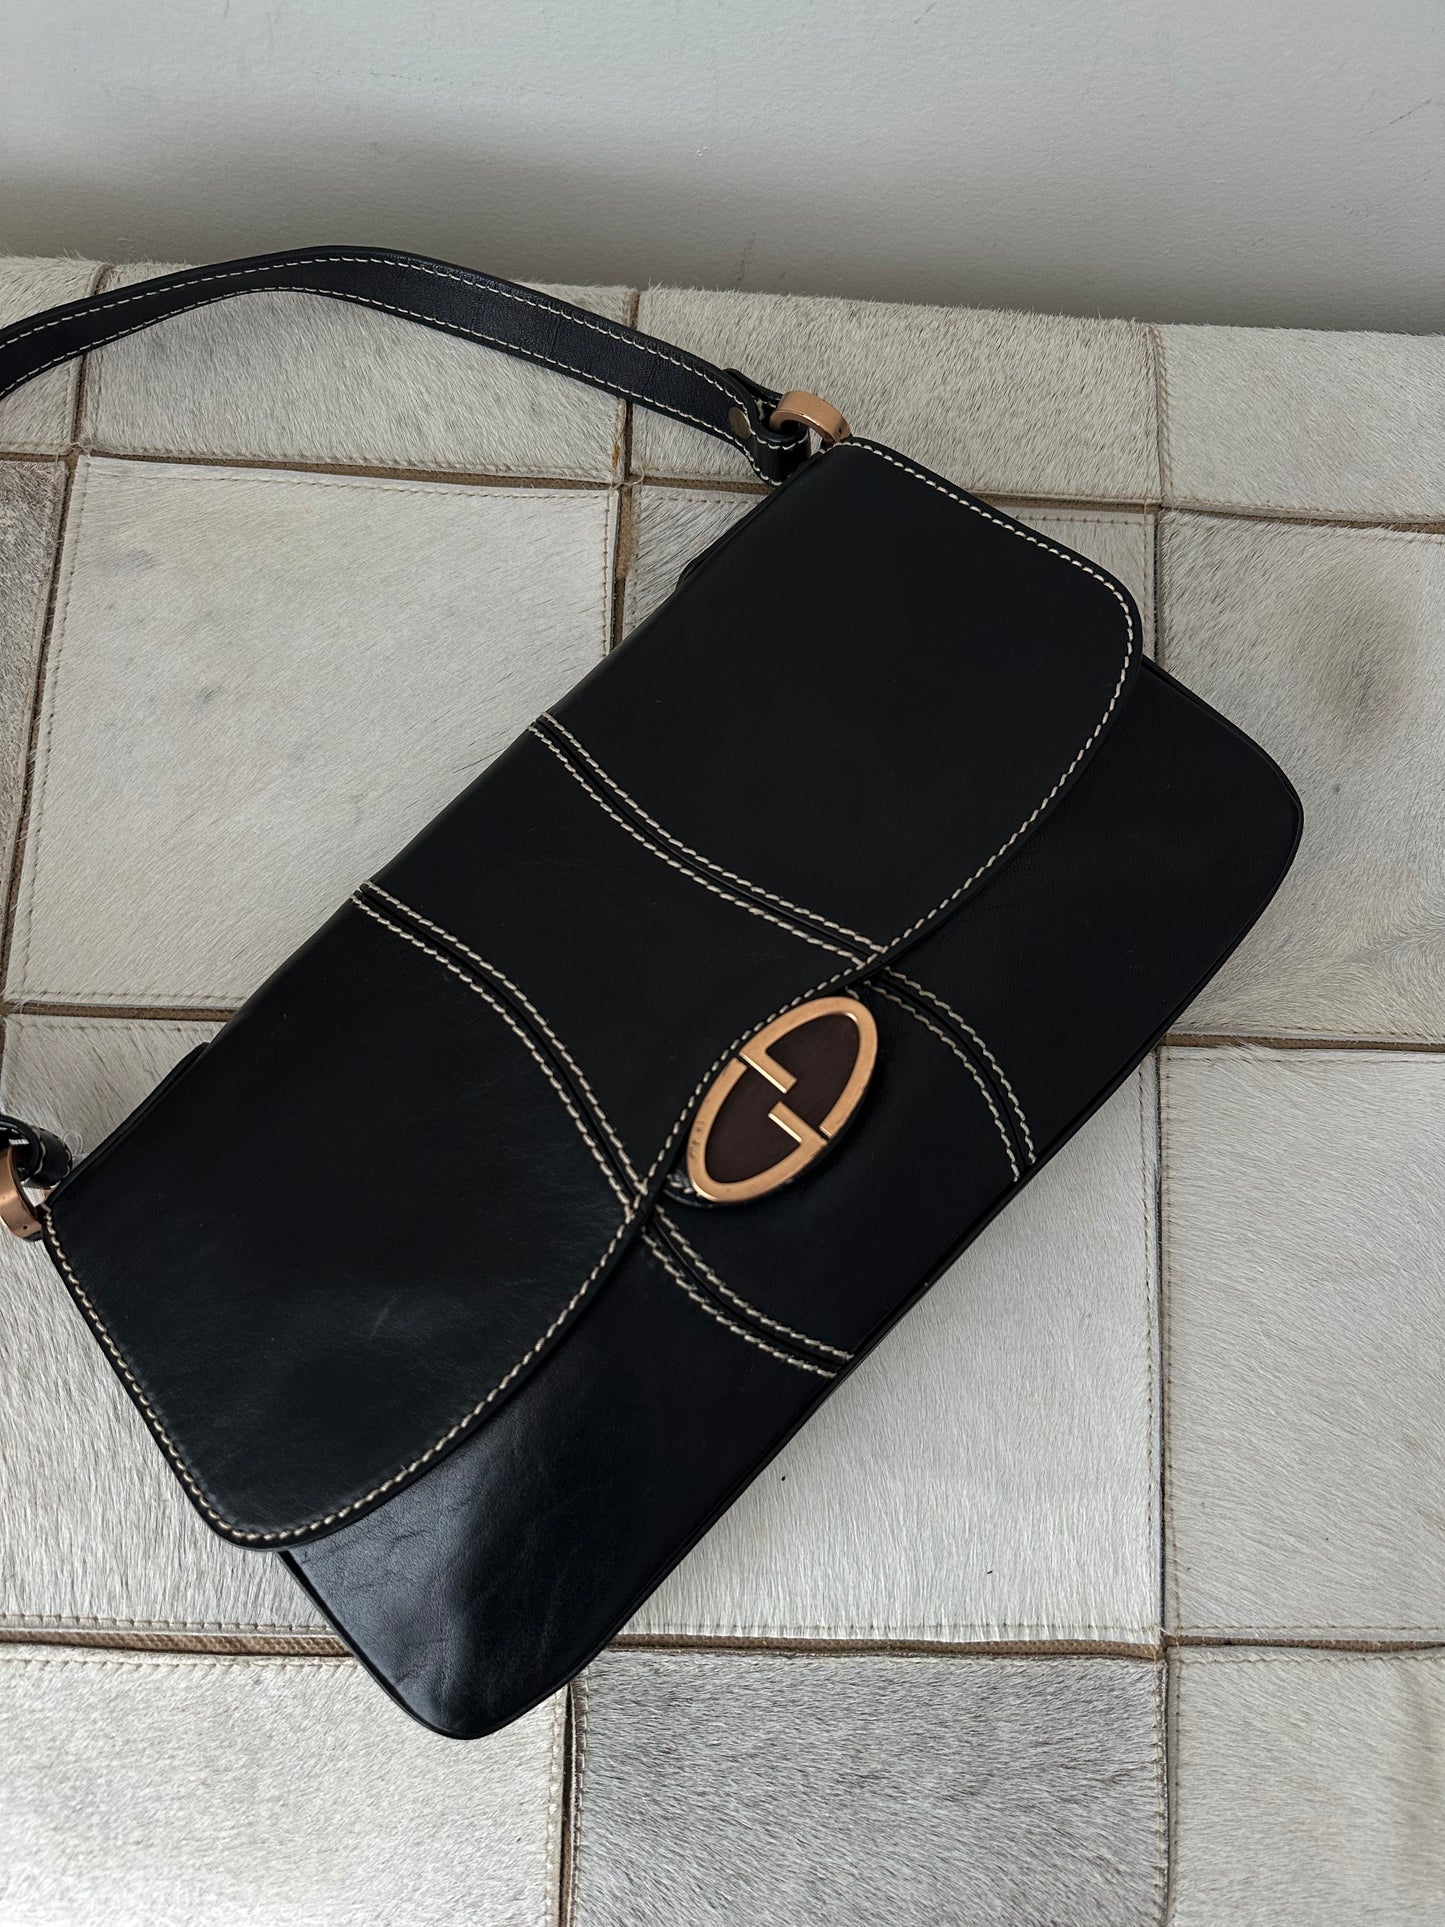 Gucci Black Leather Rose Gold Tonal Stitching Shoulder Bag